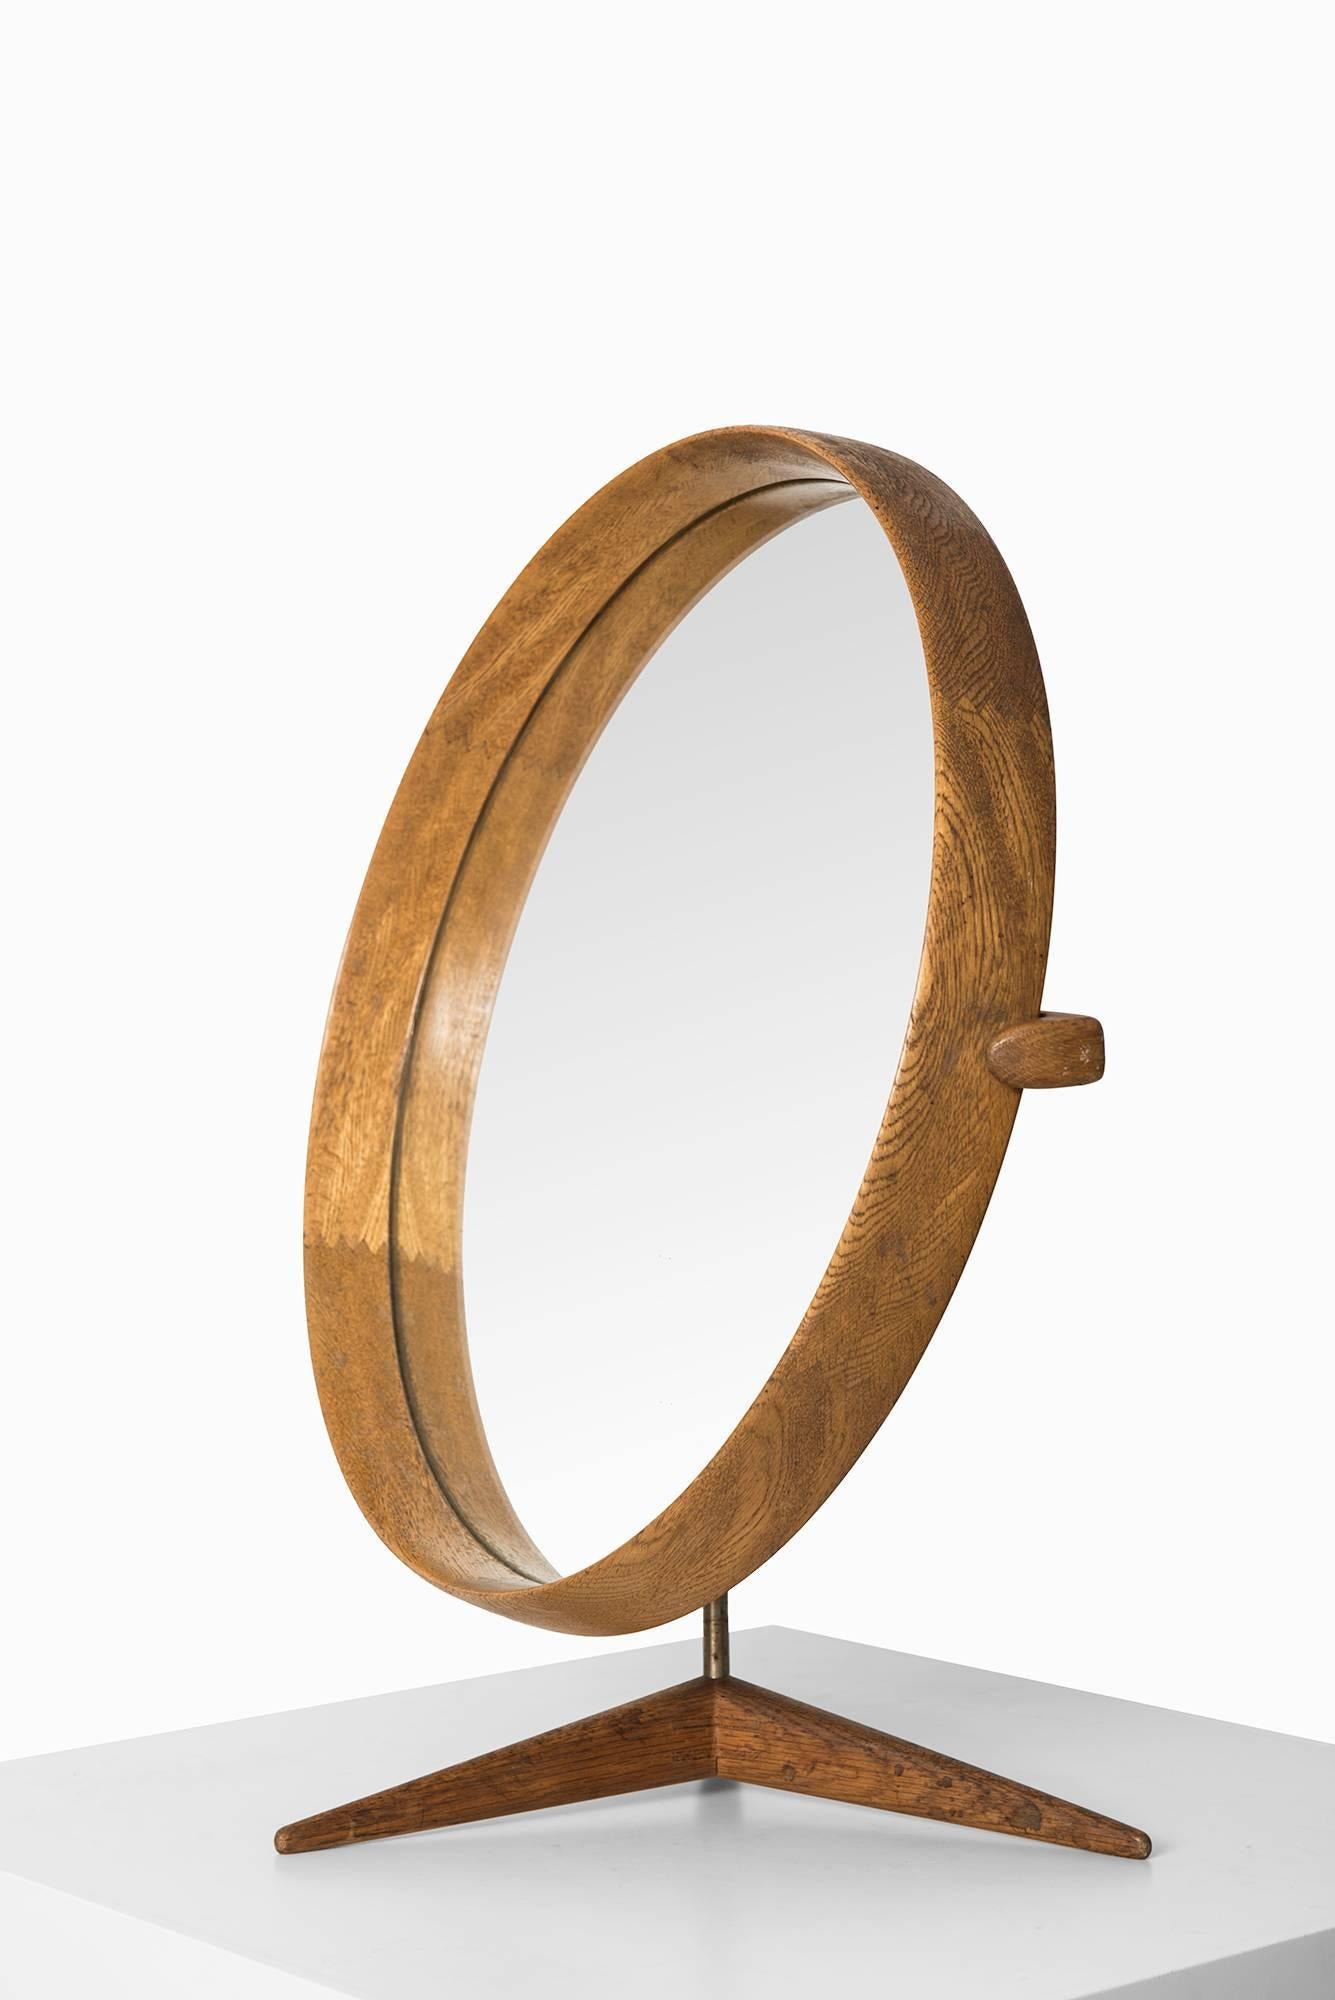 Rare table mirror designed by Uno & Östen Kristiansson. Produced by Luxus in Vittsjö, Sweden.